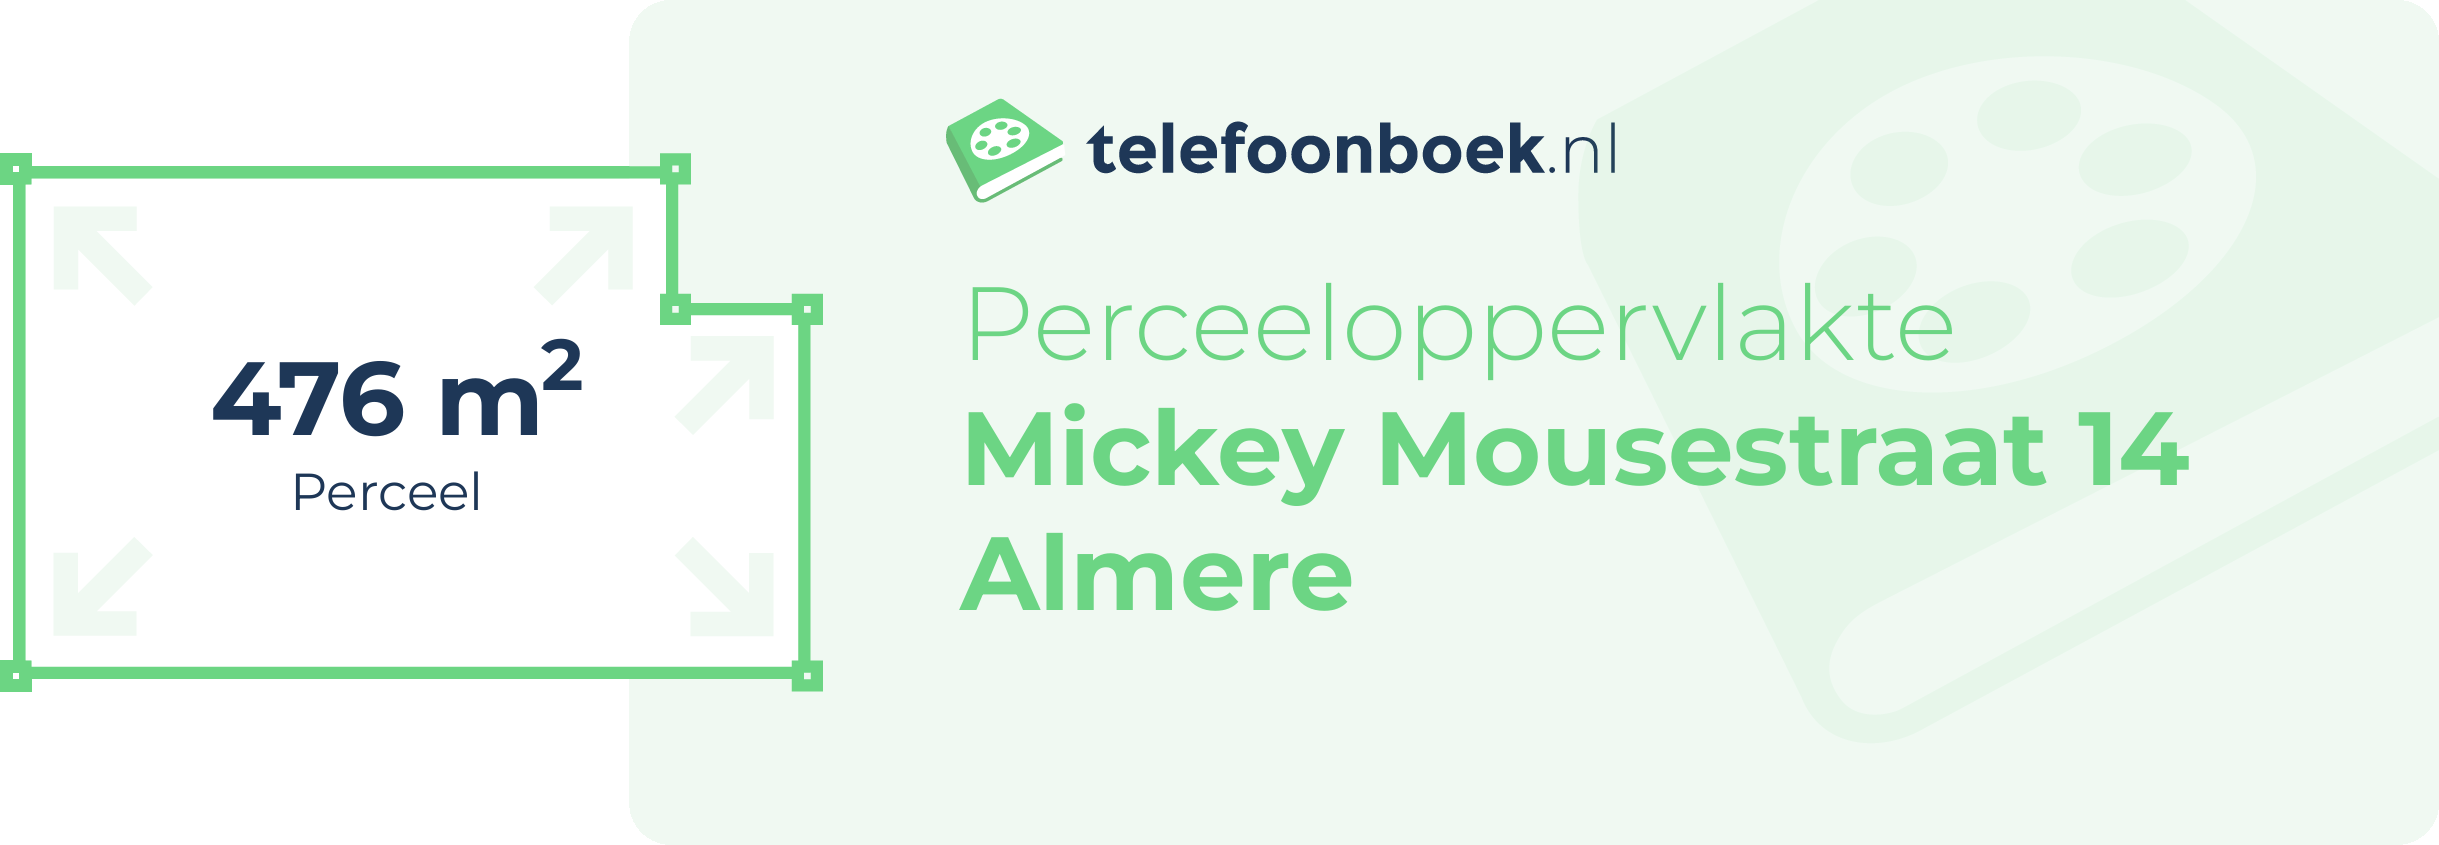 Perceeloppervlakte Mickey Mousestraat 14 Almere